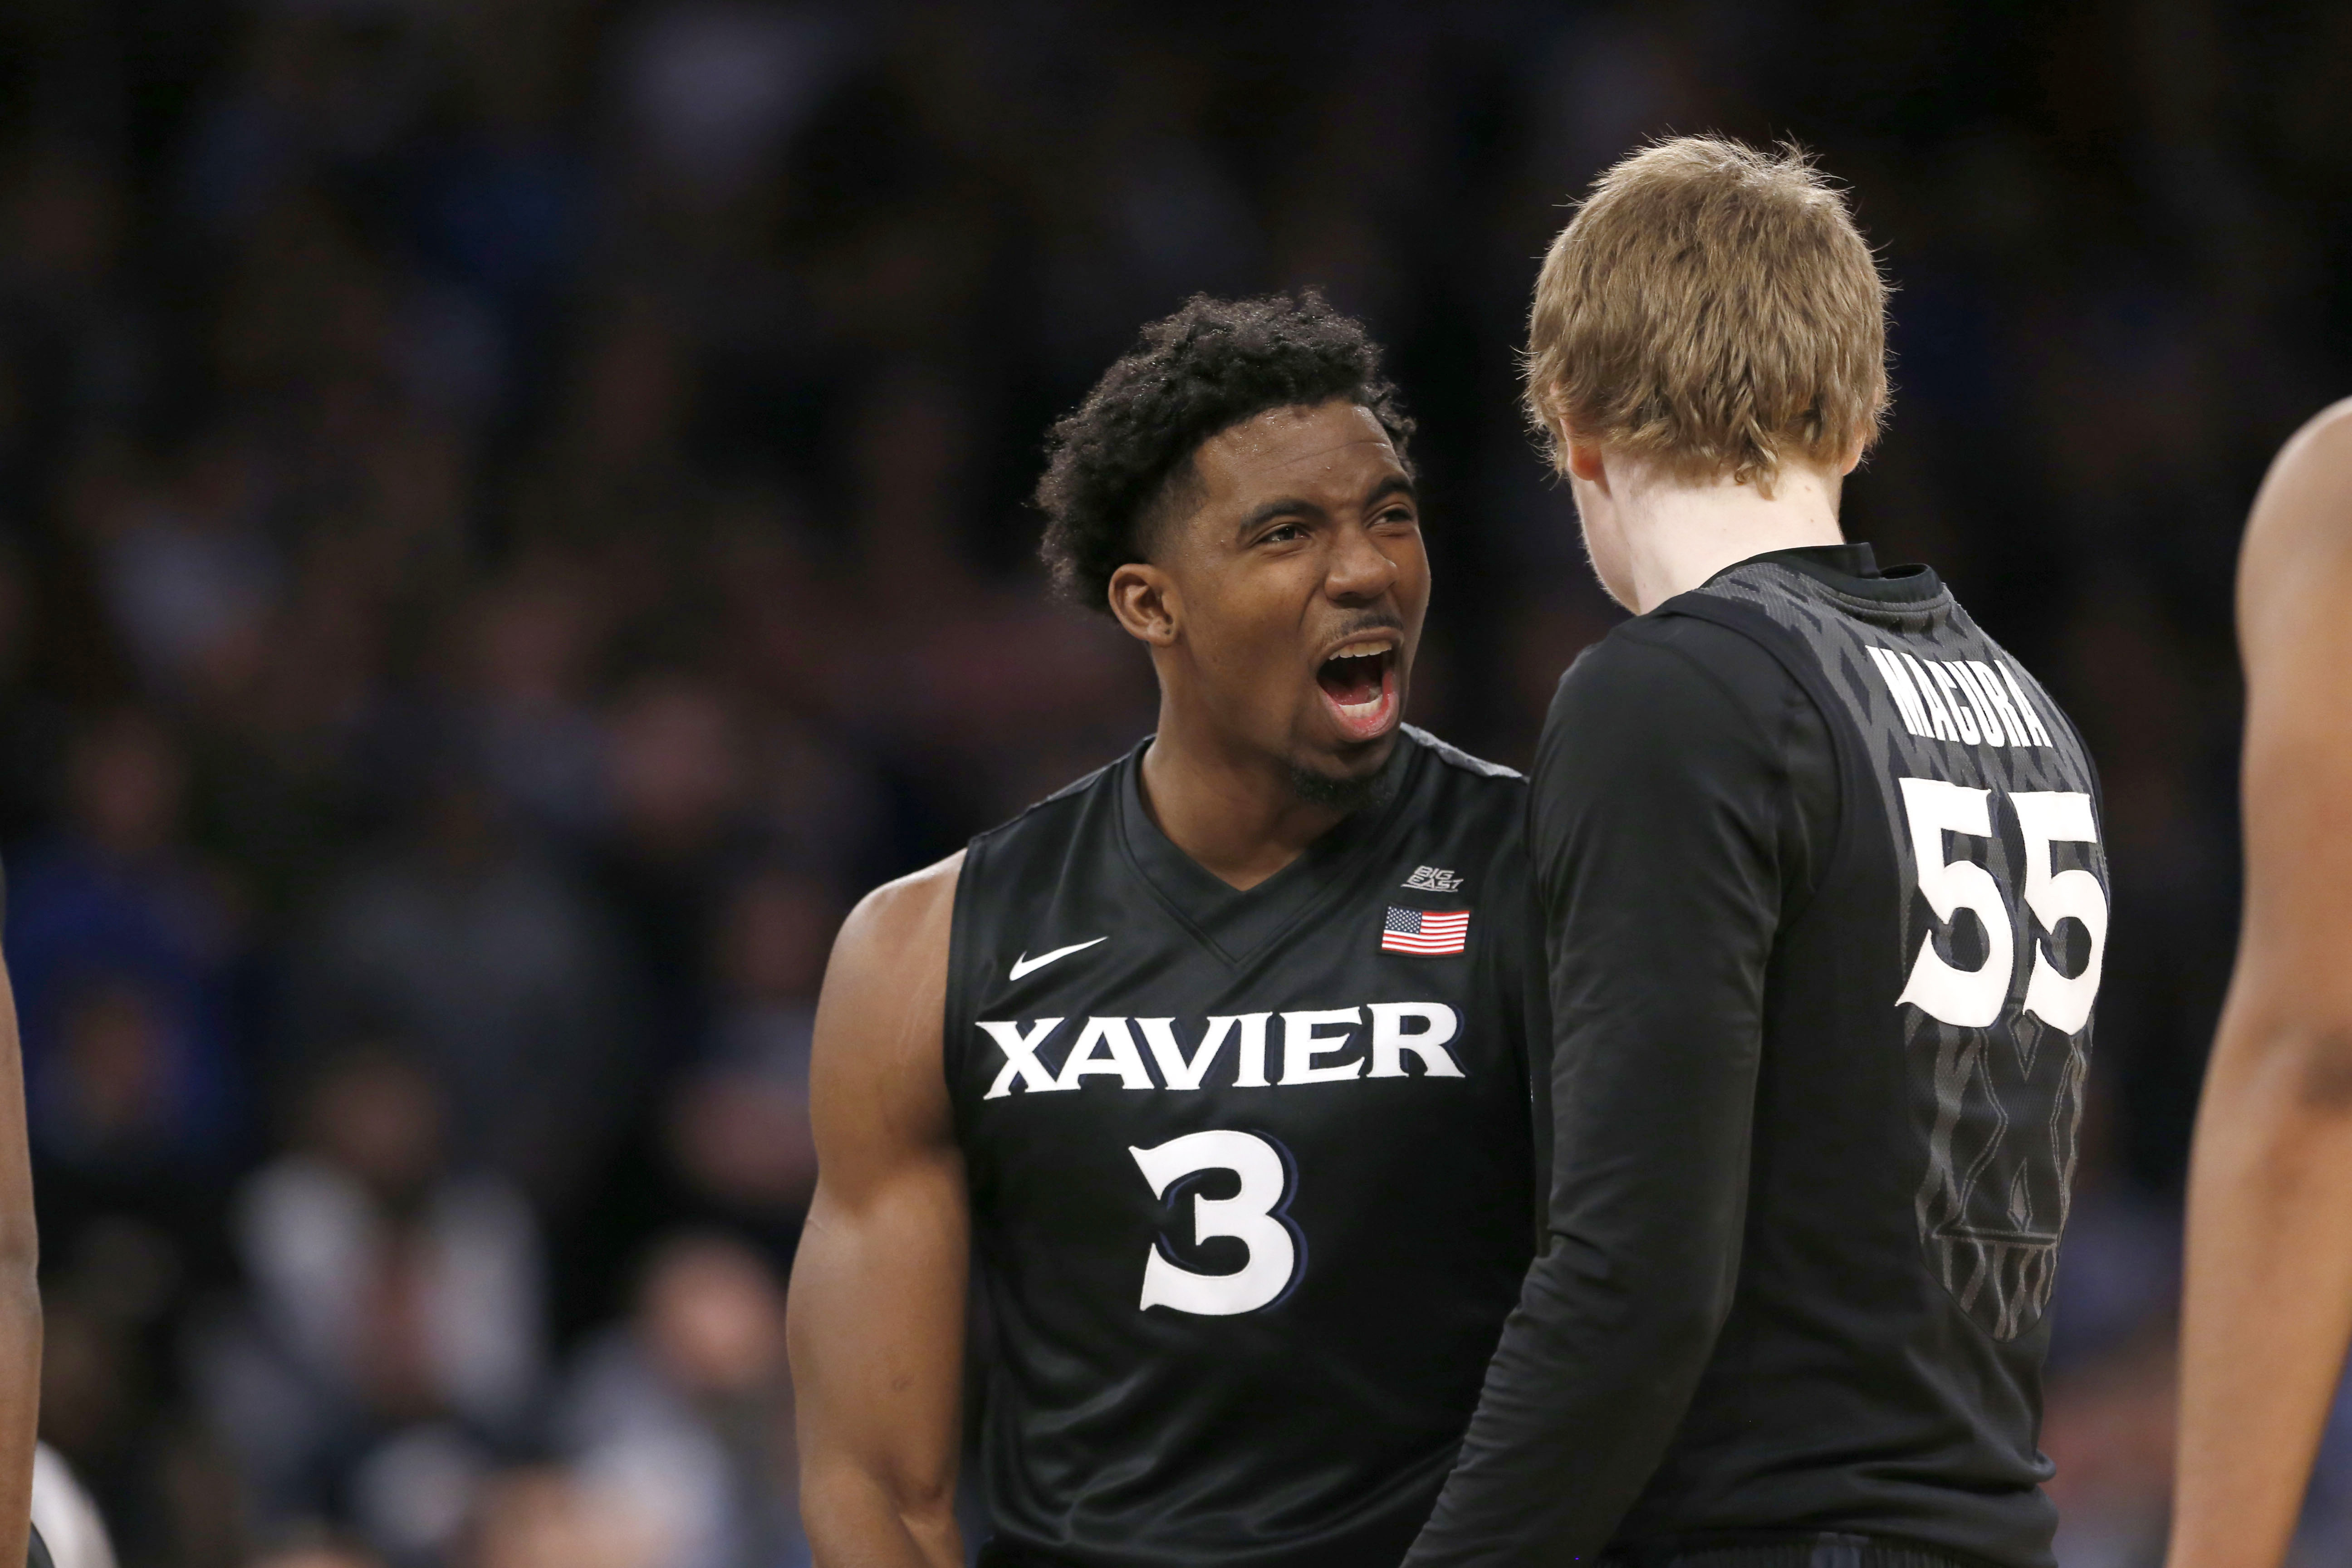 NCAA Basketball: Big East Conference Tournament-Xavier vs Butler